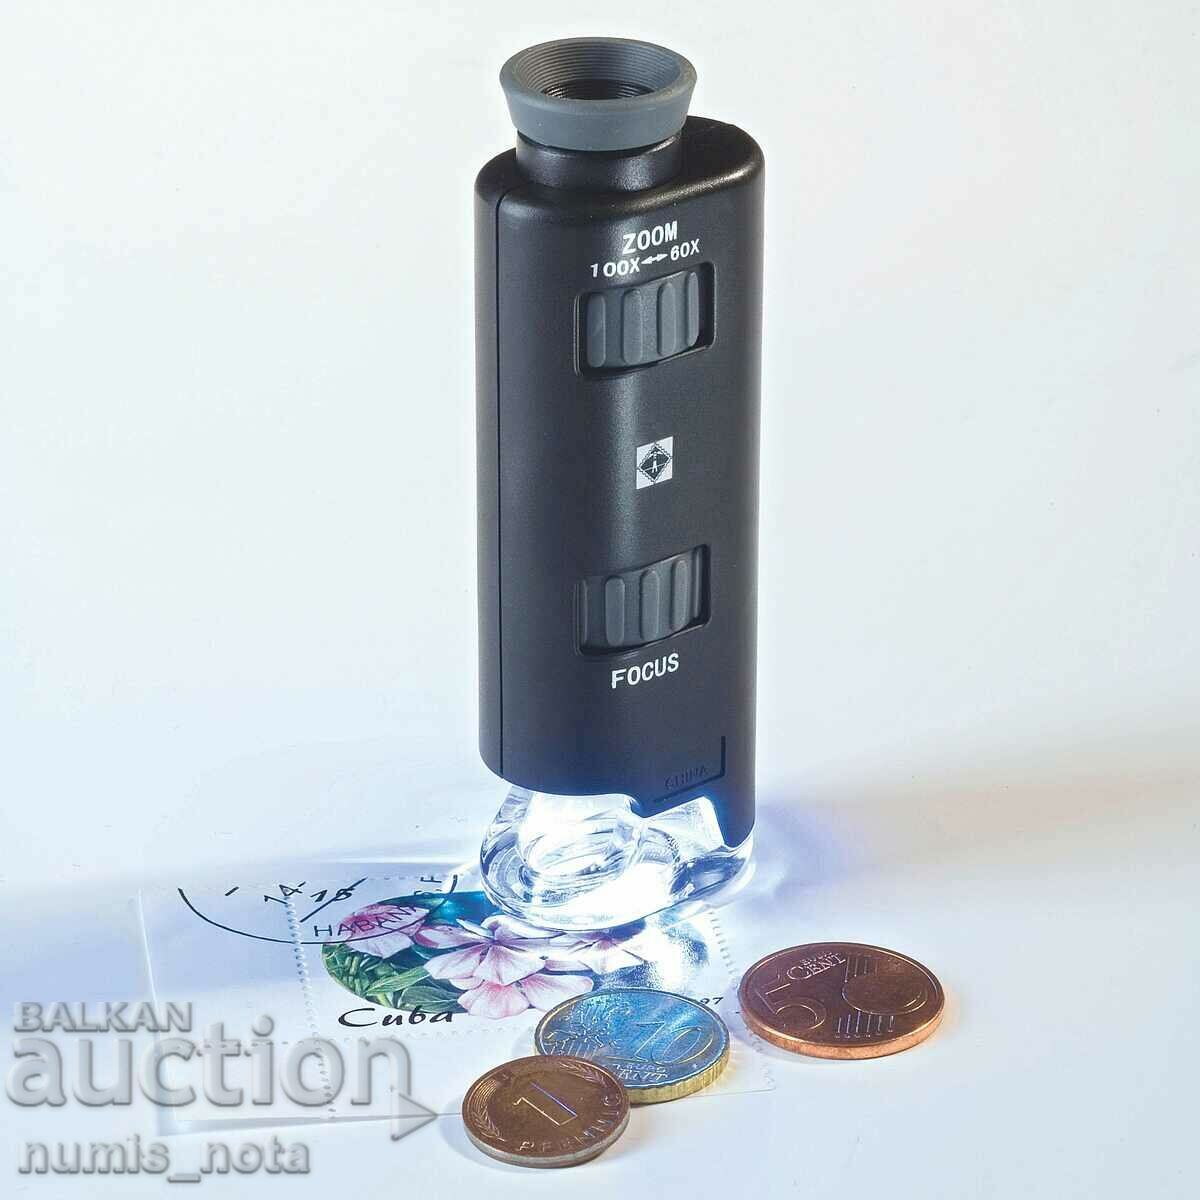 mini pocket microscope LEUCHTTURM -60X 100X with LED backlight